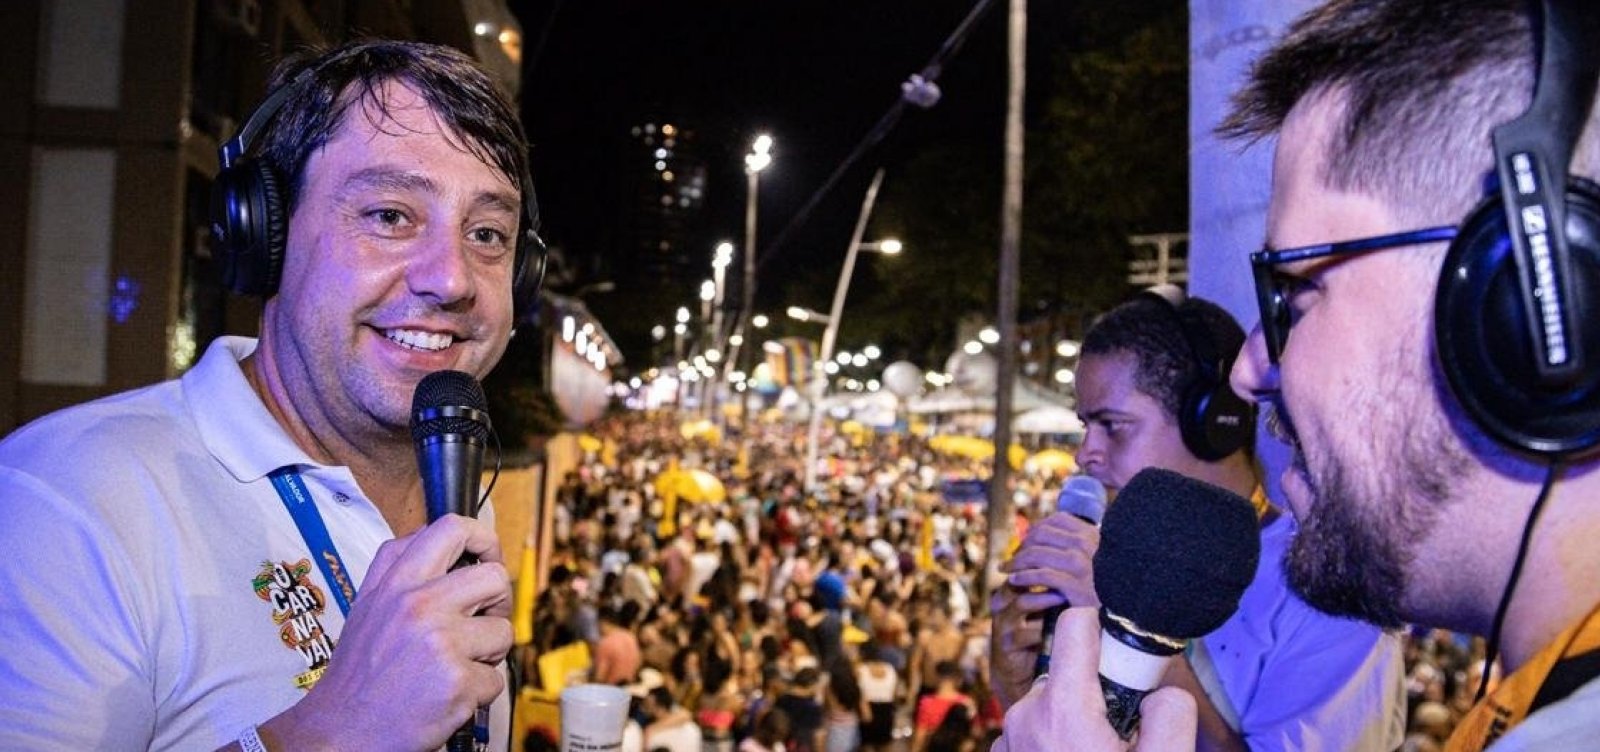 Folia nas Prefeituras-Bairro fortalece o Carnaval de Salvador